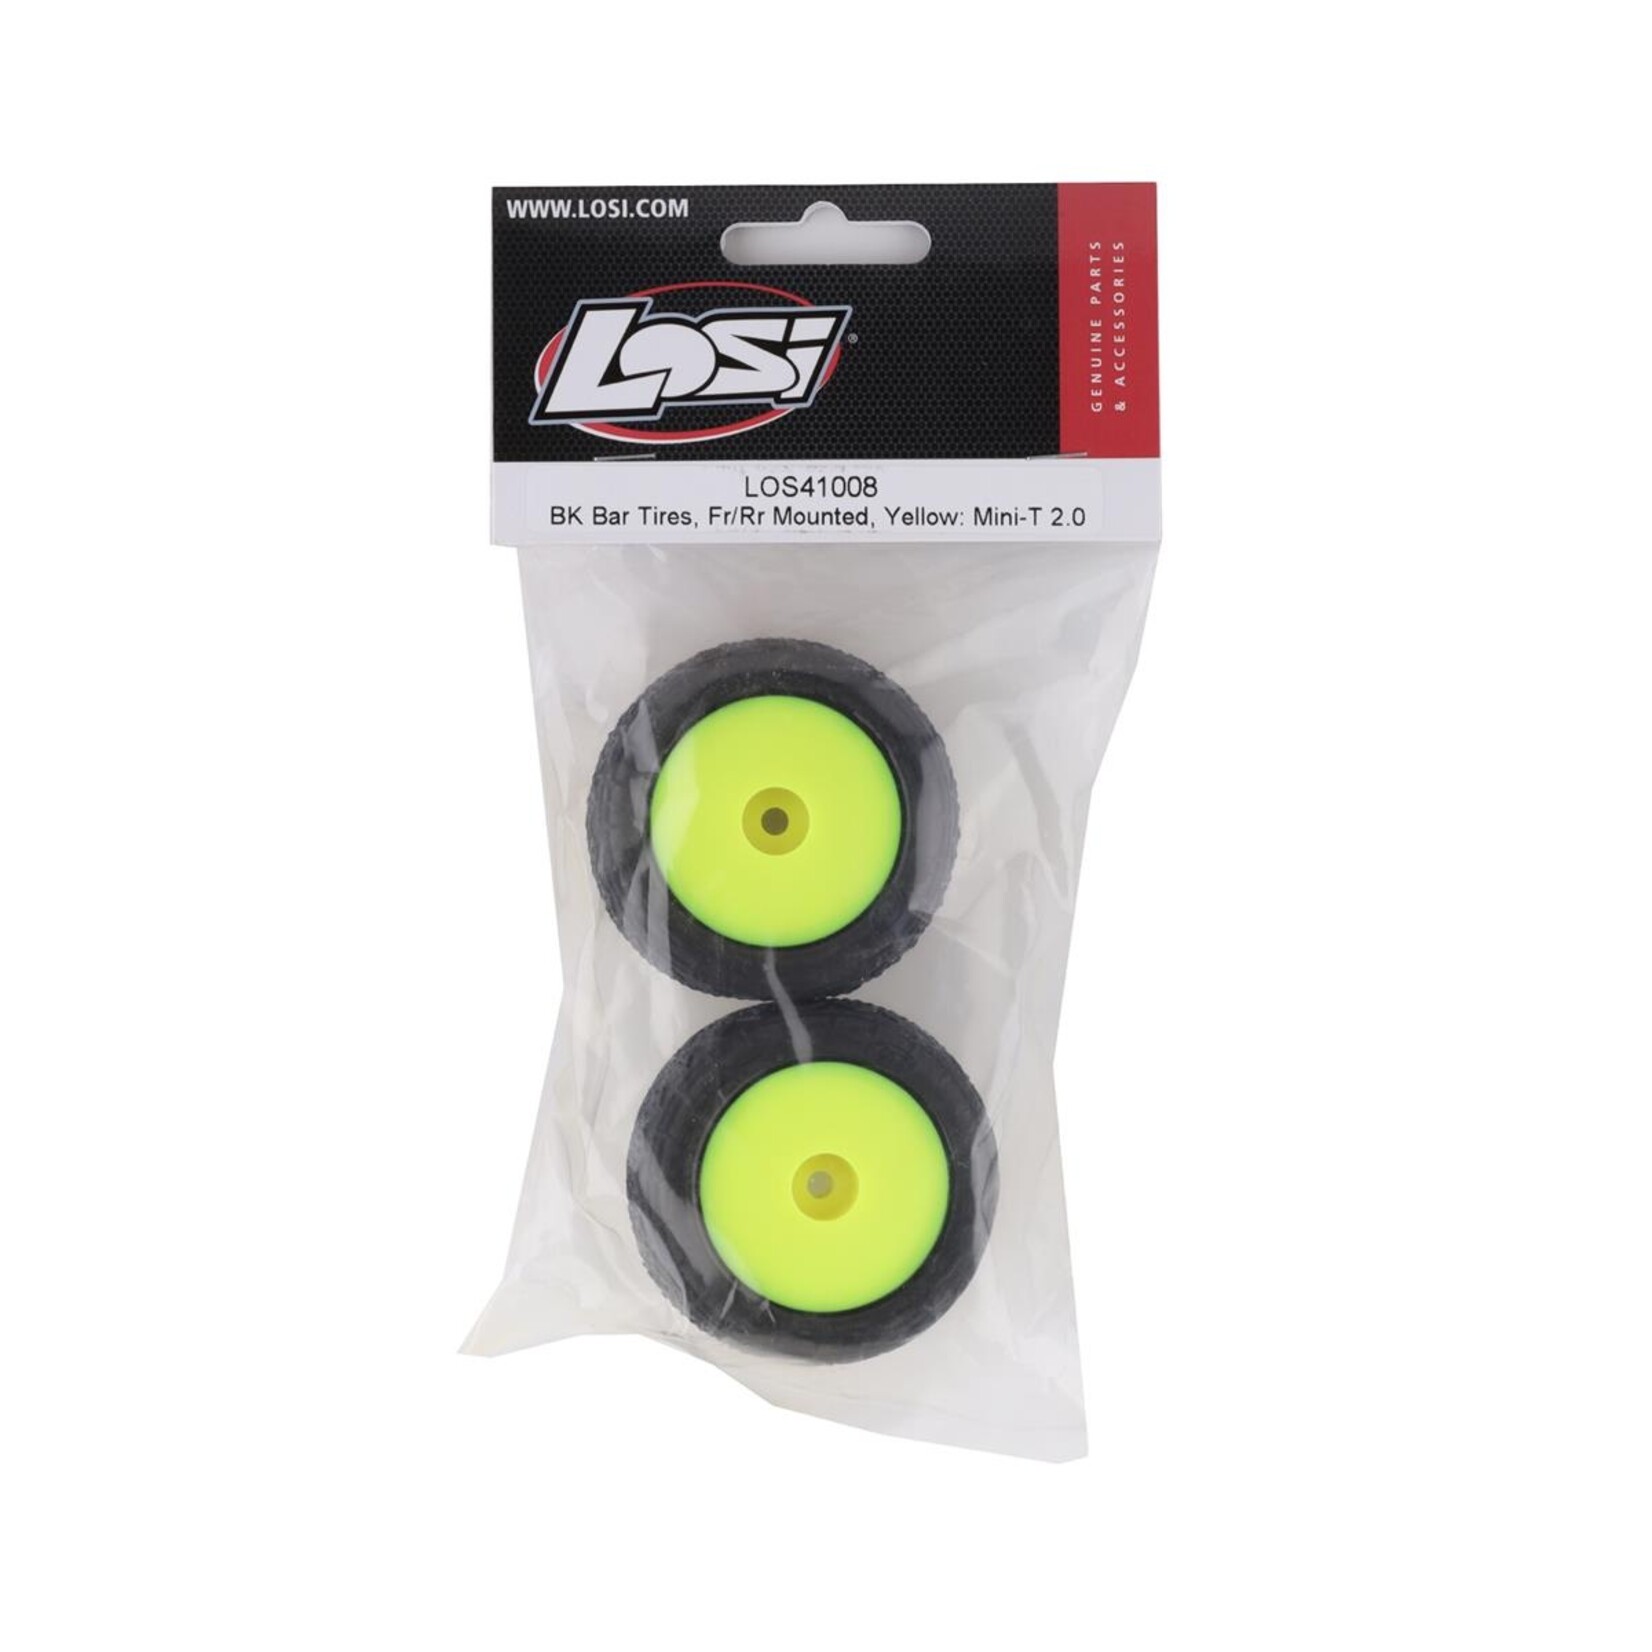 Losi Losi Mini-T 2.0 BK Bar Pre-Mounted Tires (Yellow) (2) #LOS41008